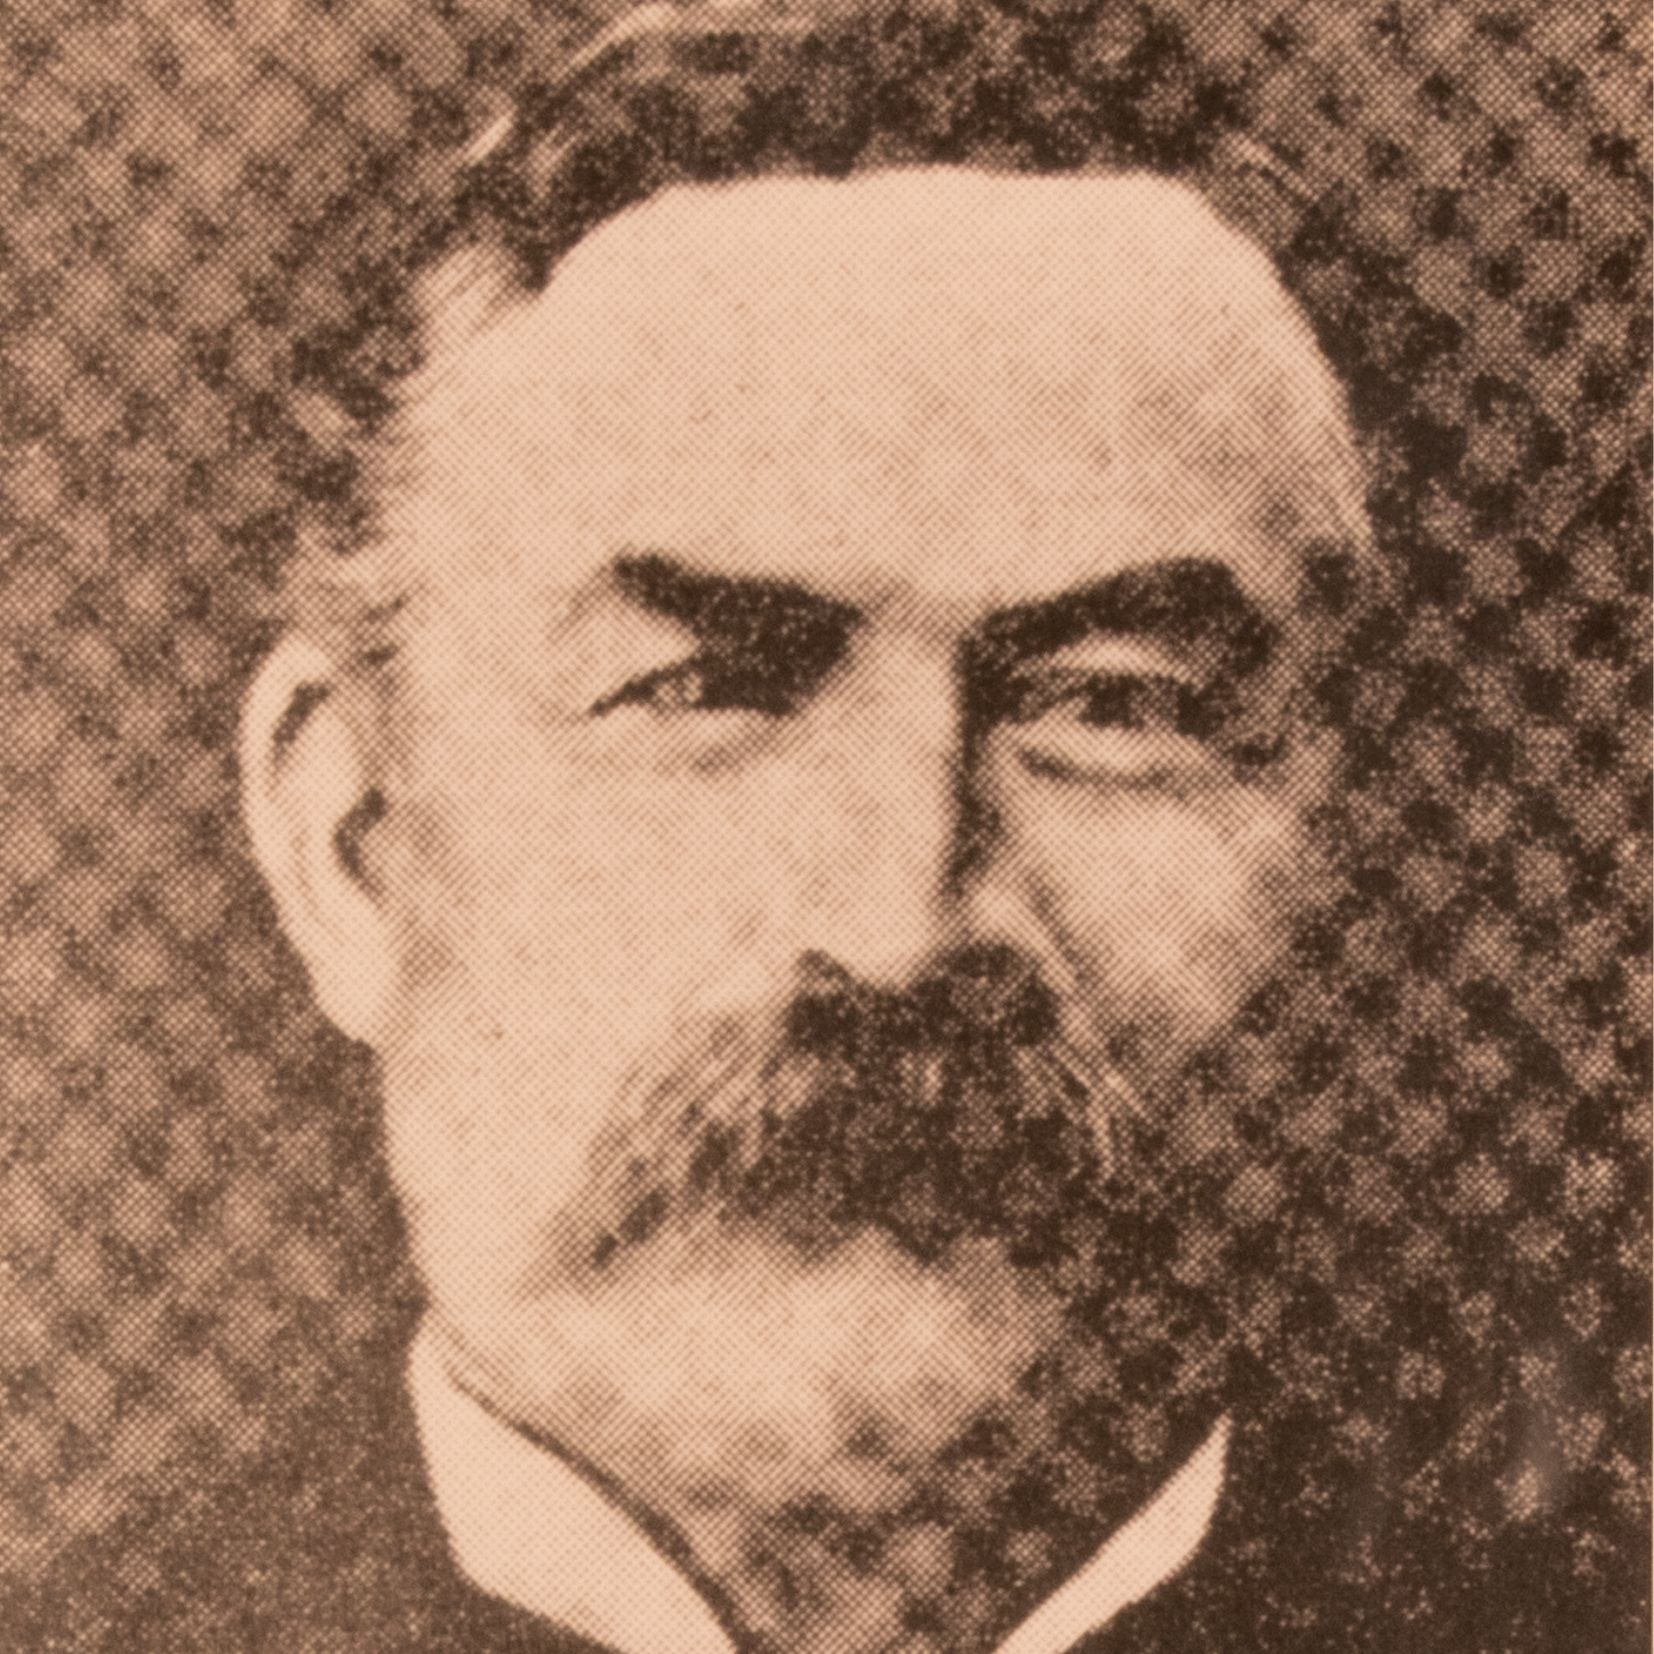 Mayor Samuel Taylor